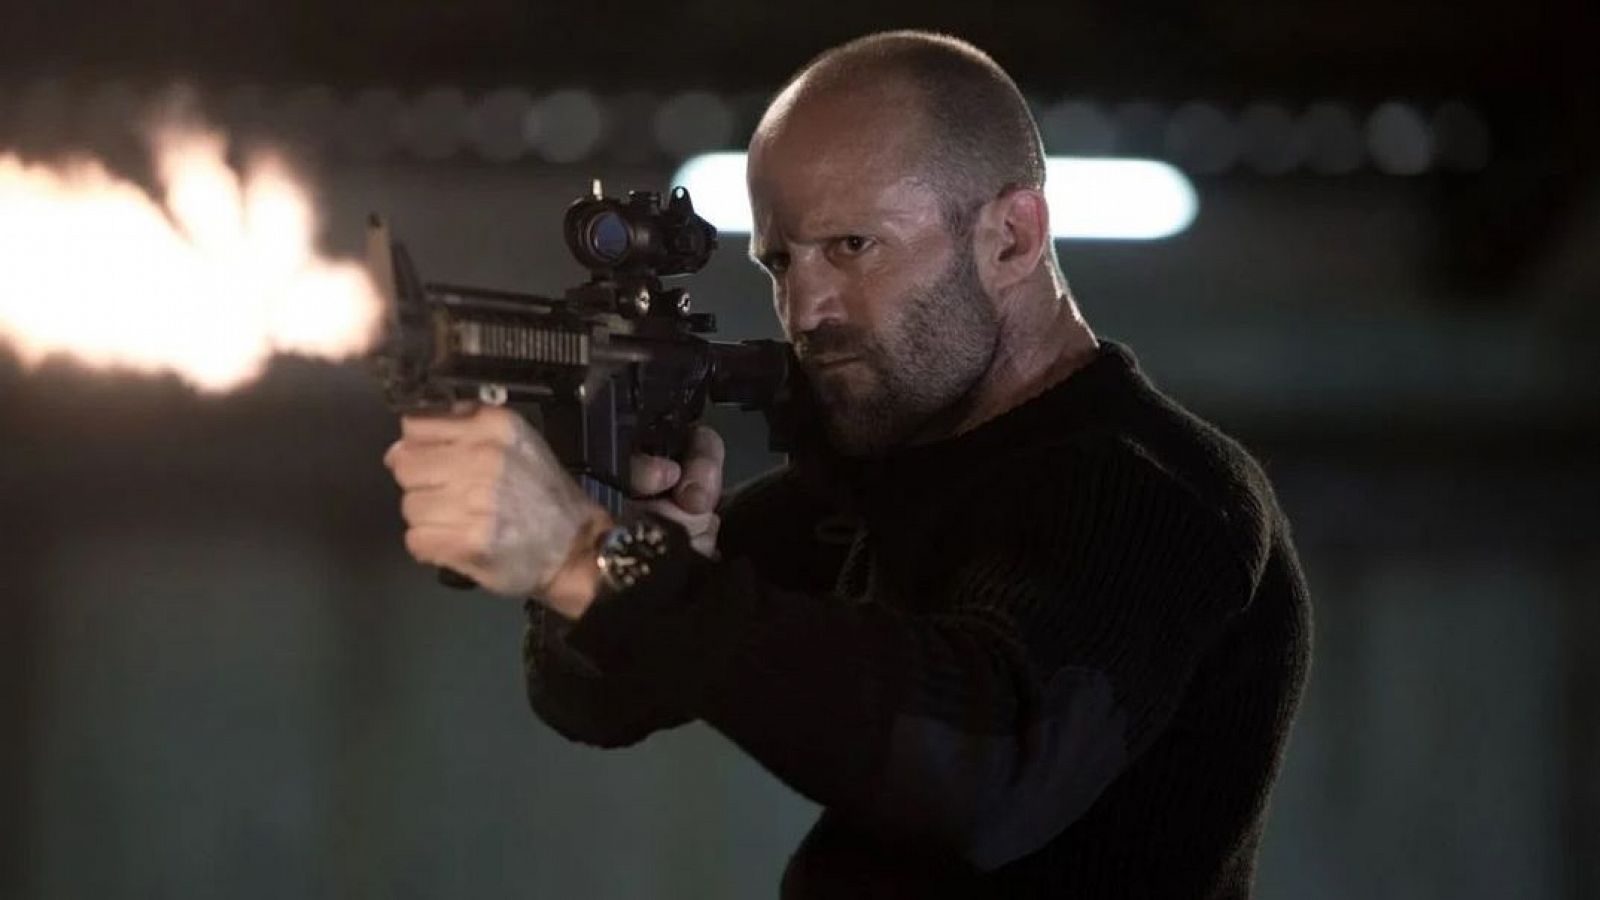 La venganza letal de Jason Statham: 5 curiosidades de la película 'Despierta la furia'